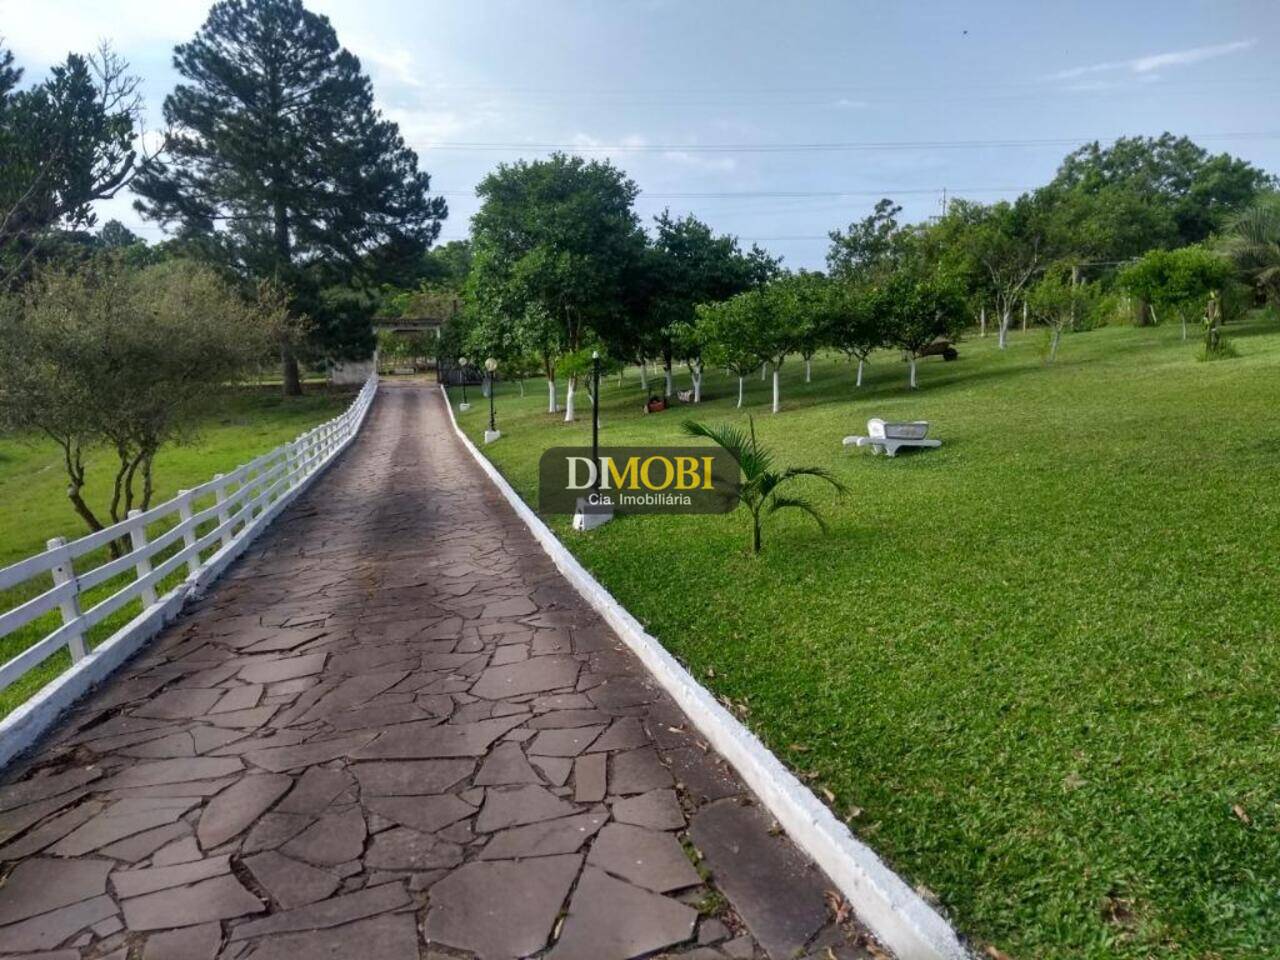 Sítio Parque Itacolomi, Gravataí - RS